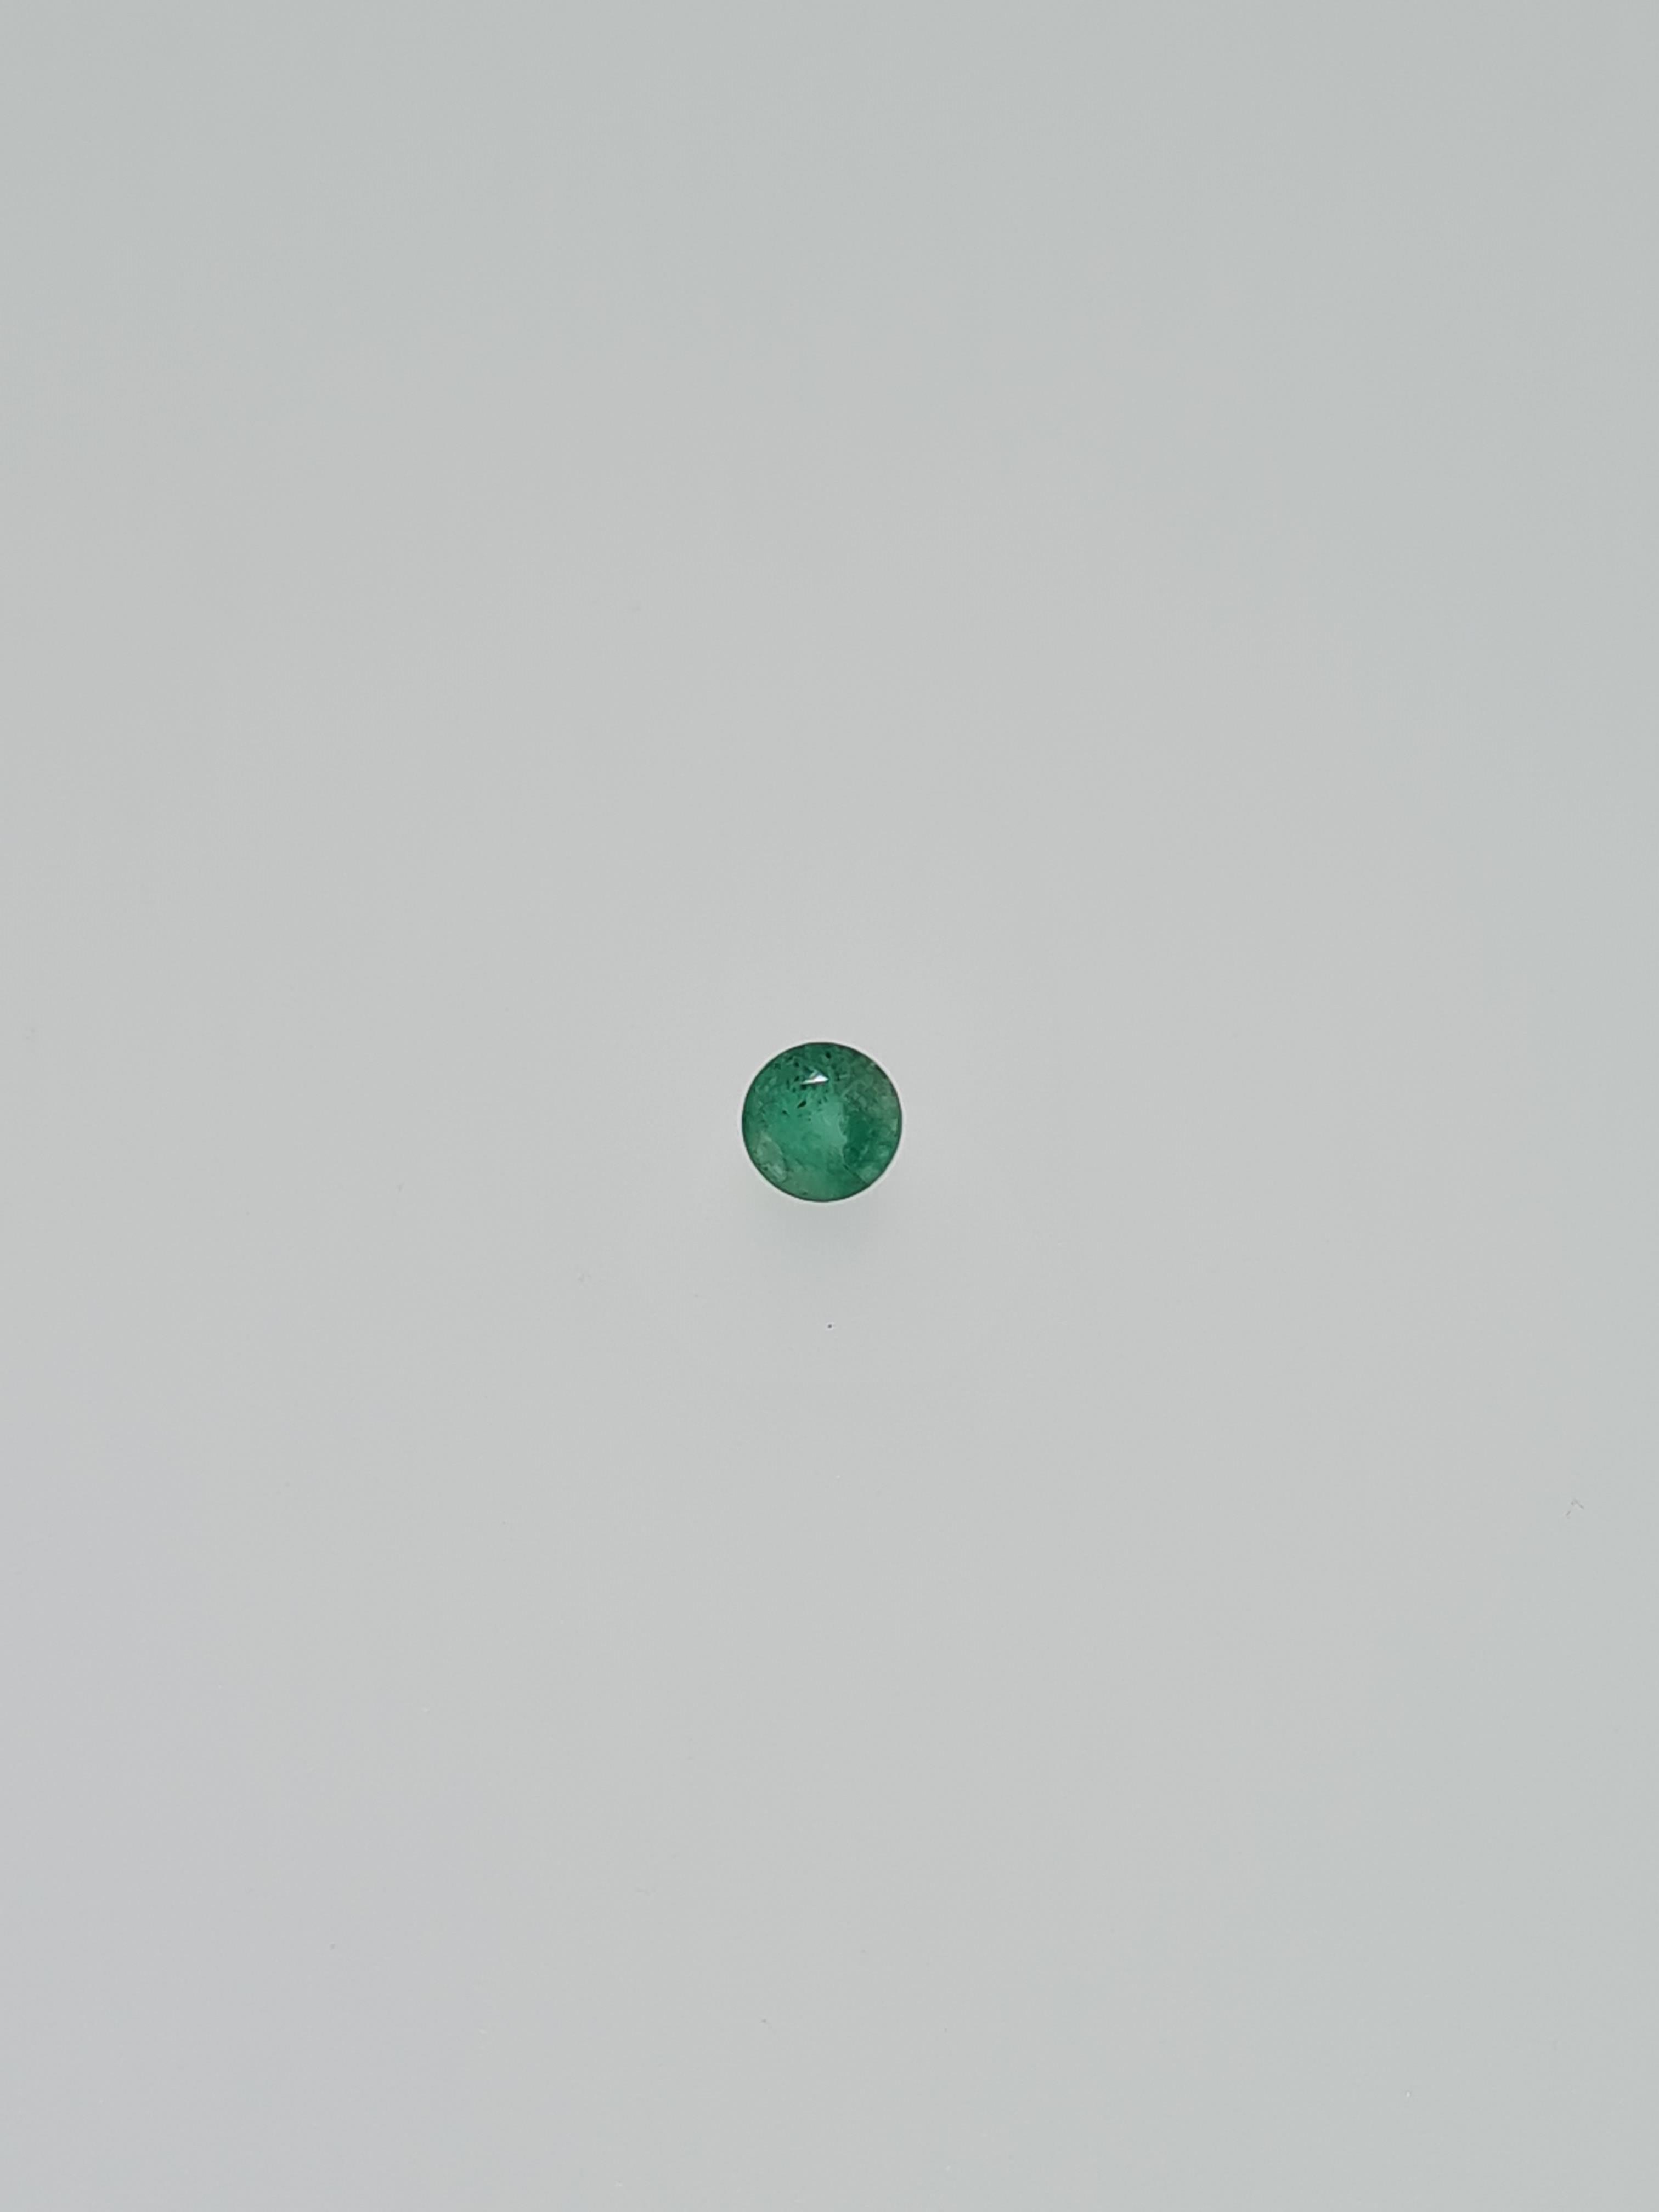 Emarald round cut gem stone - Image 4 of 4